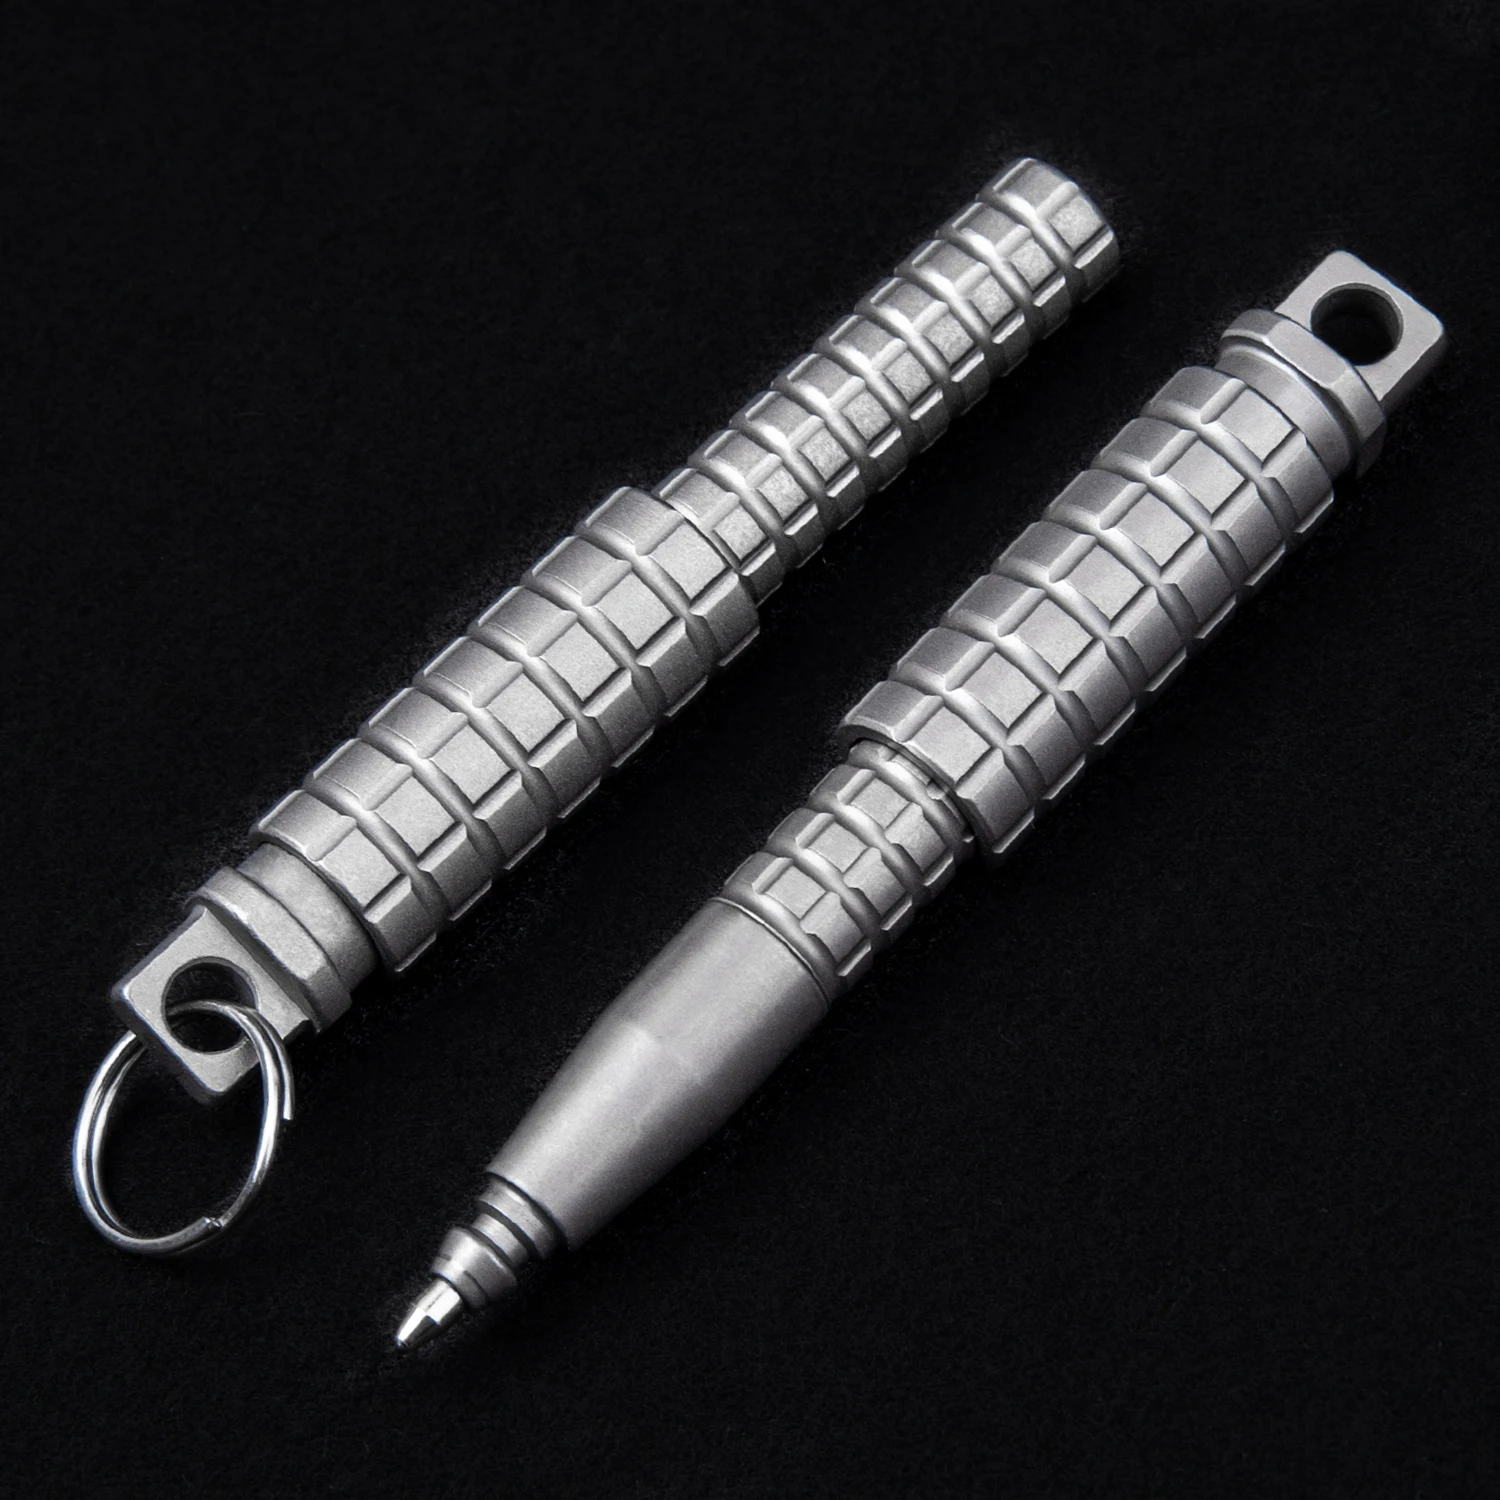 Titanium Alloy Ballpoint Pen Portable Mini Pen Work Signature Pen Office School Writing Pen